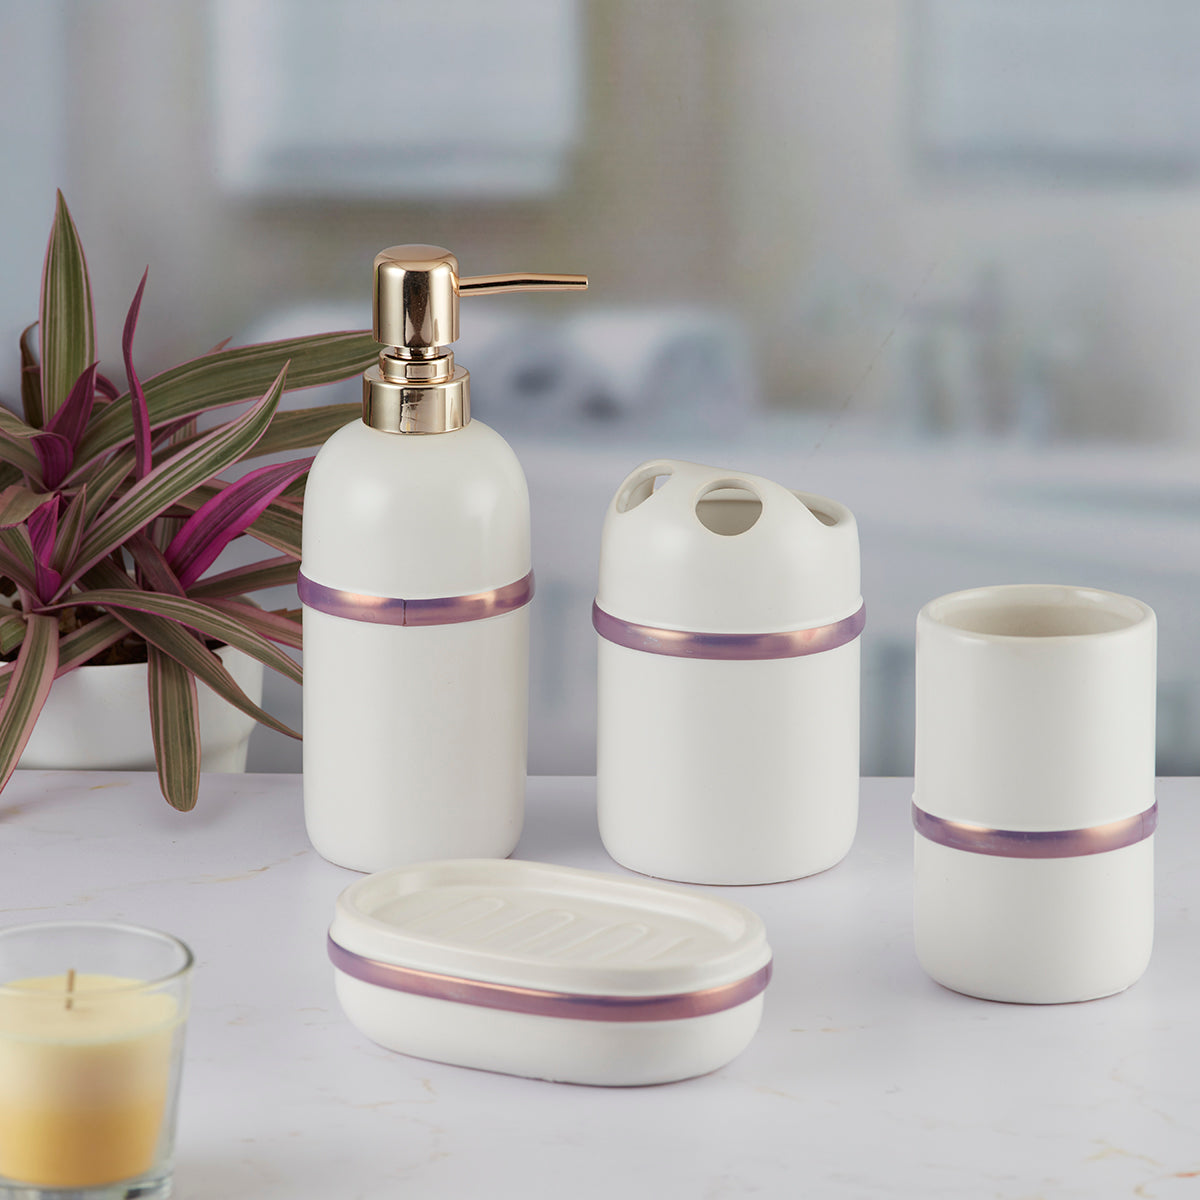 Ceramic Bathroom Accessories Set of 4 Bath Set with Soap Dispenser (9643)